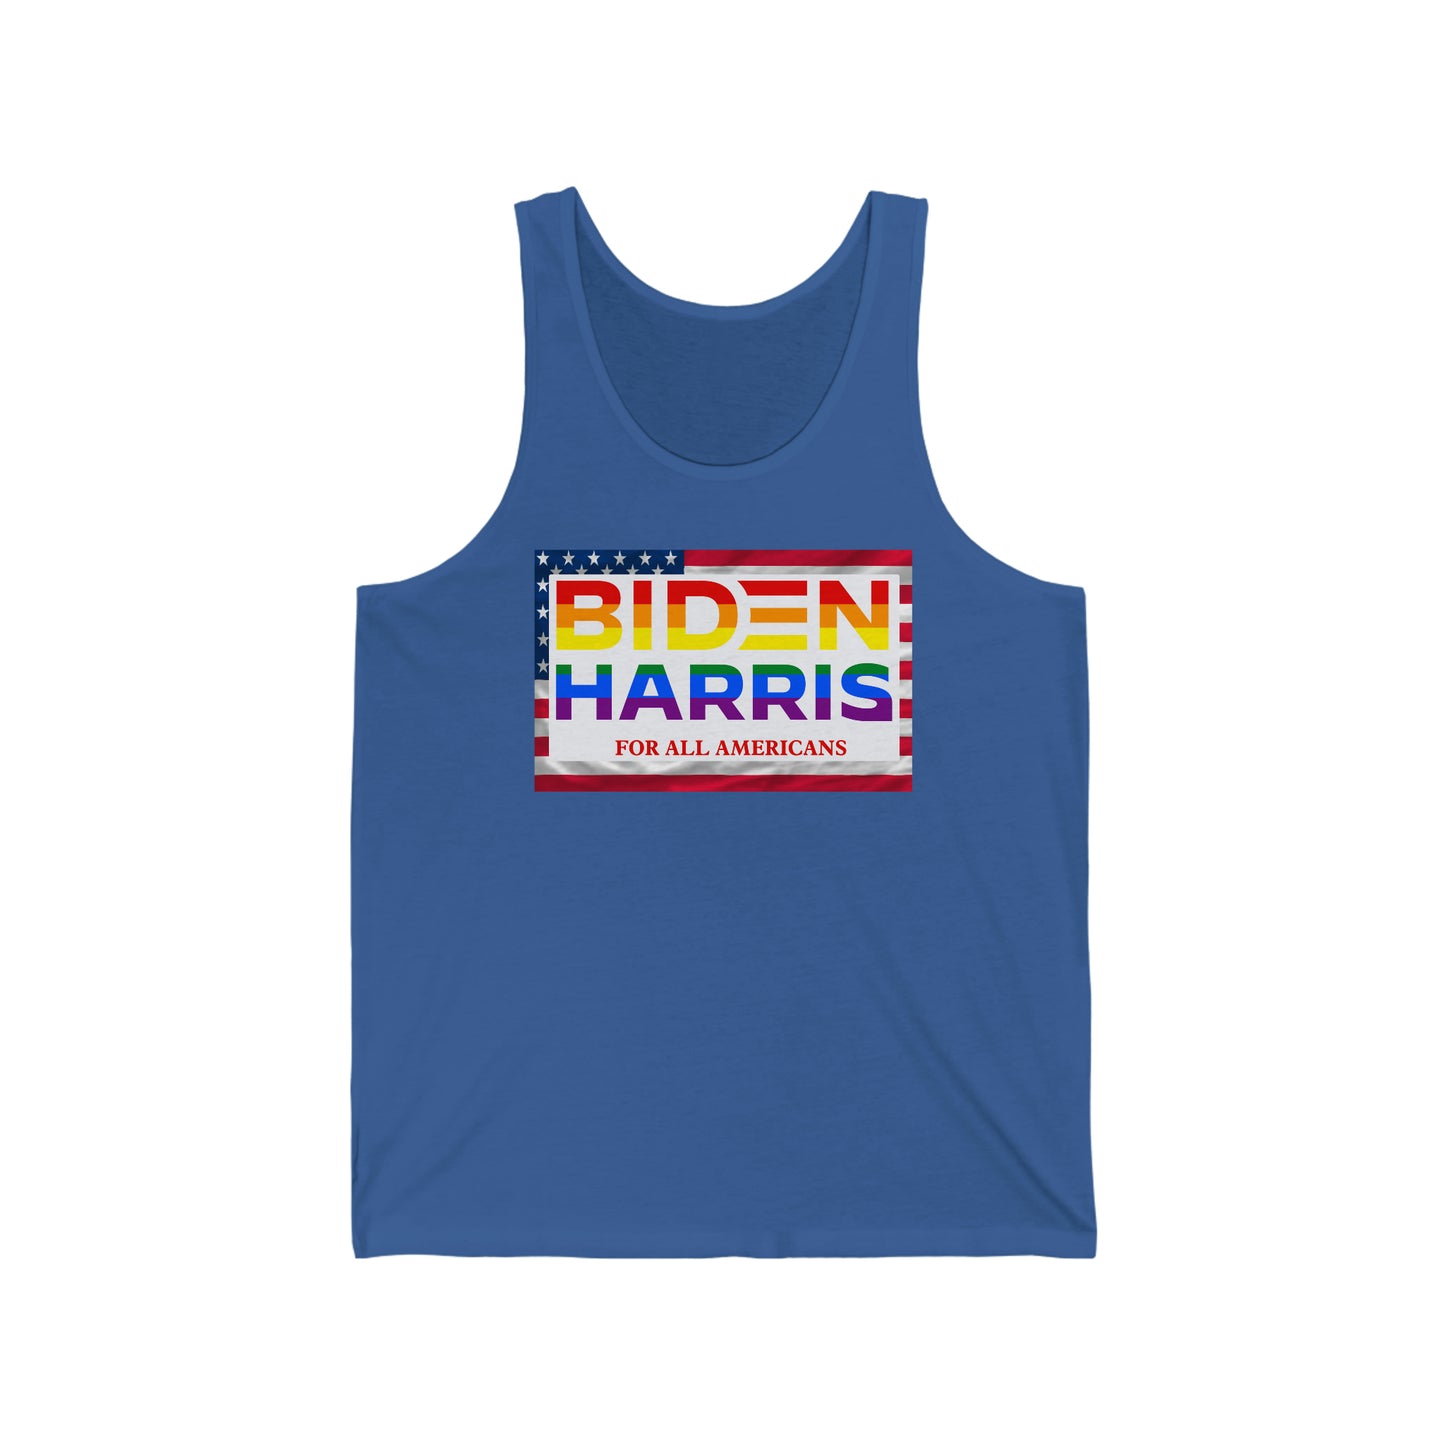 Biden-Harris for All Americans Adult Unisex Tank Top